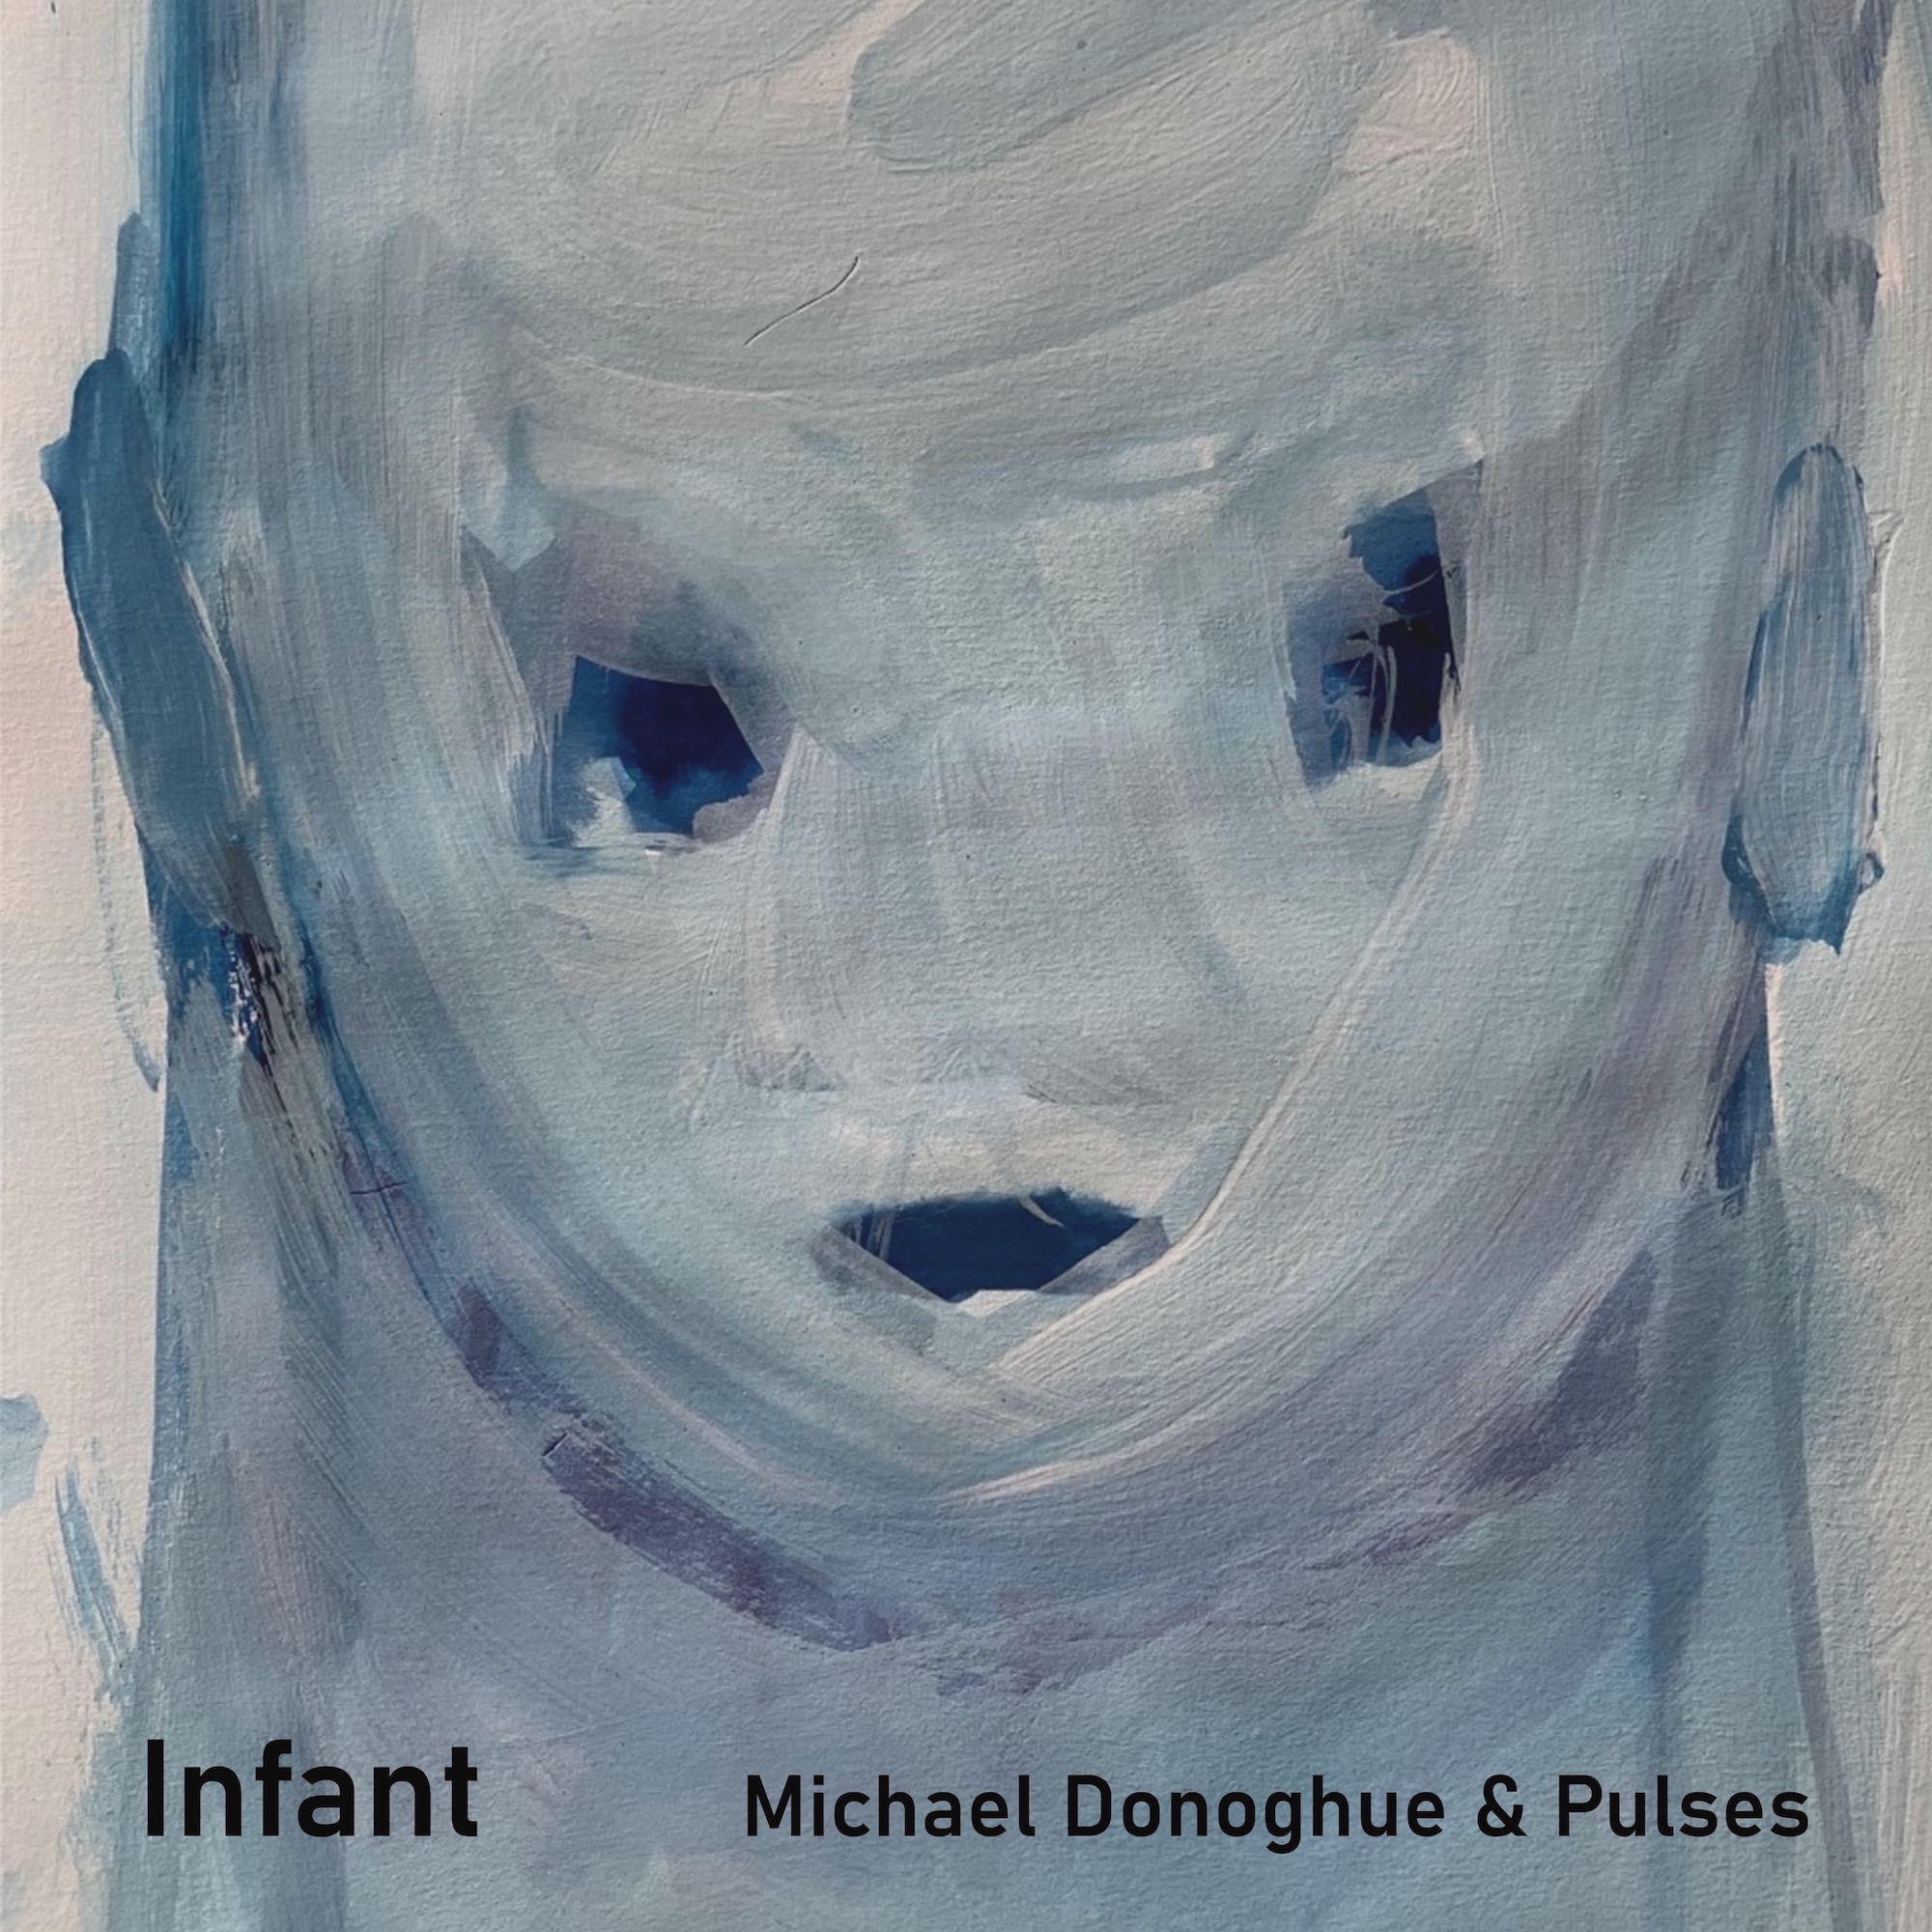 Michael Donoghue & Pulses “Infant”